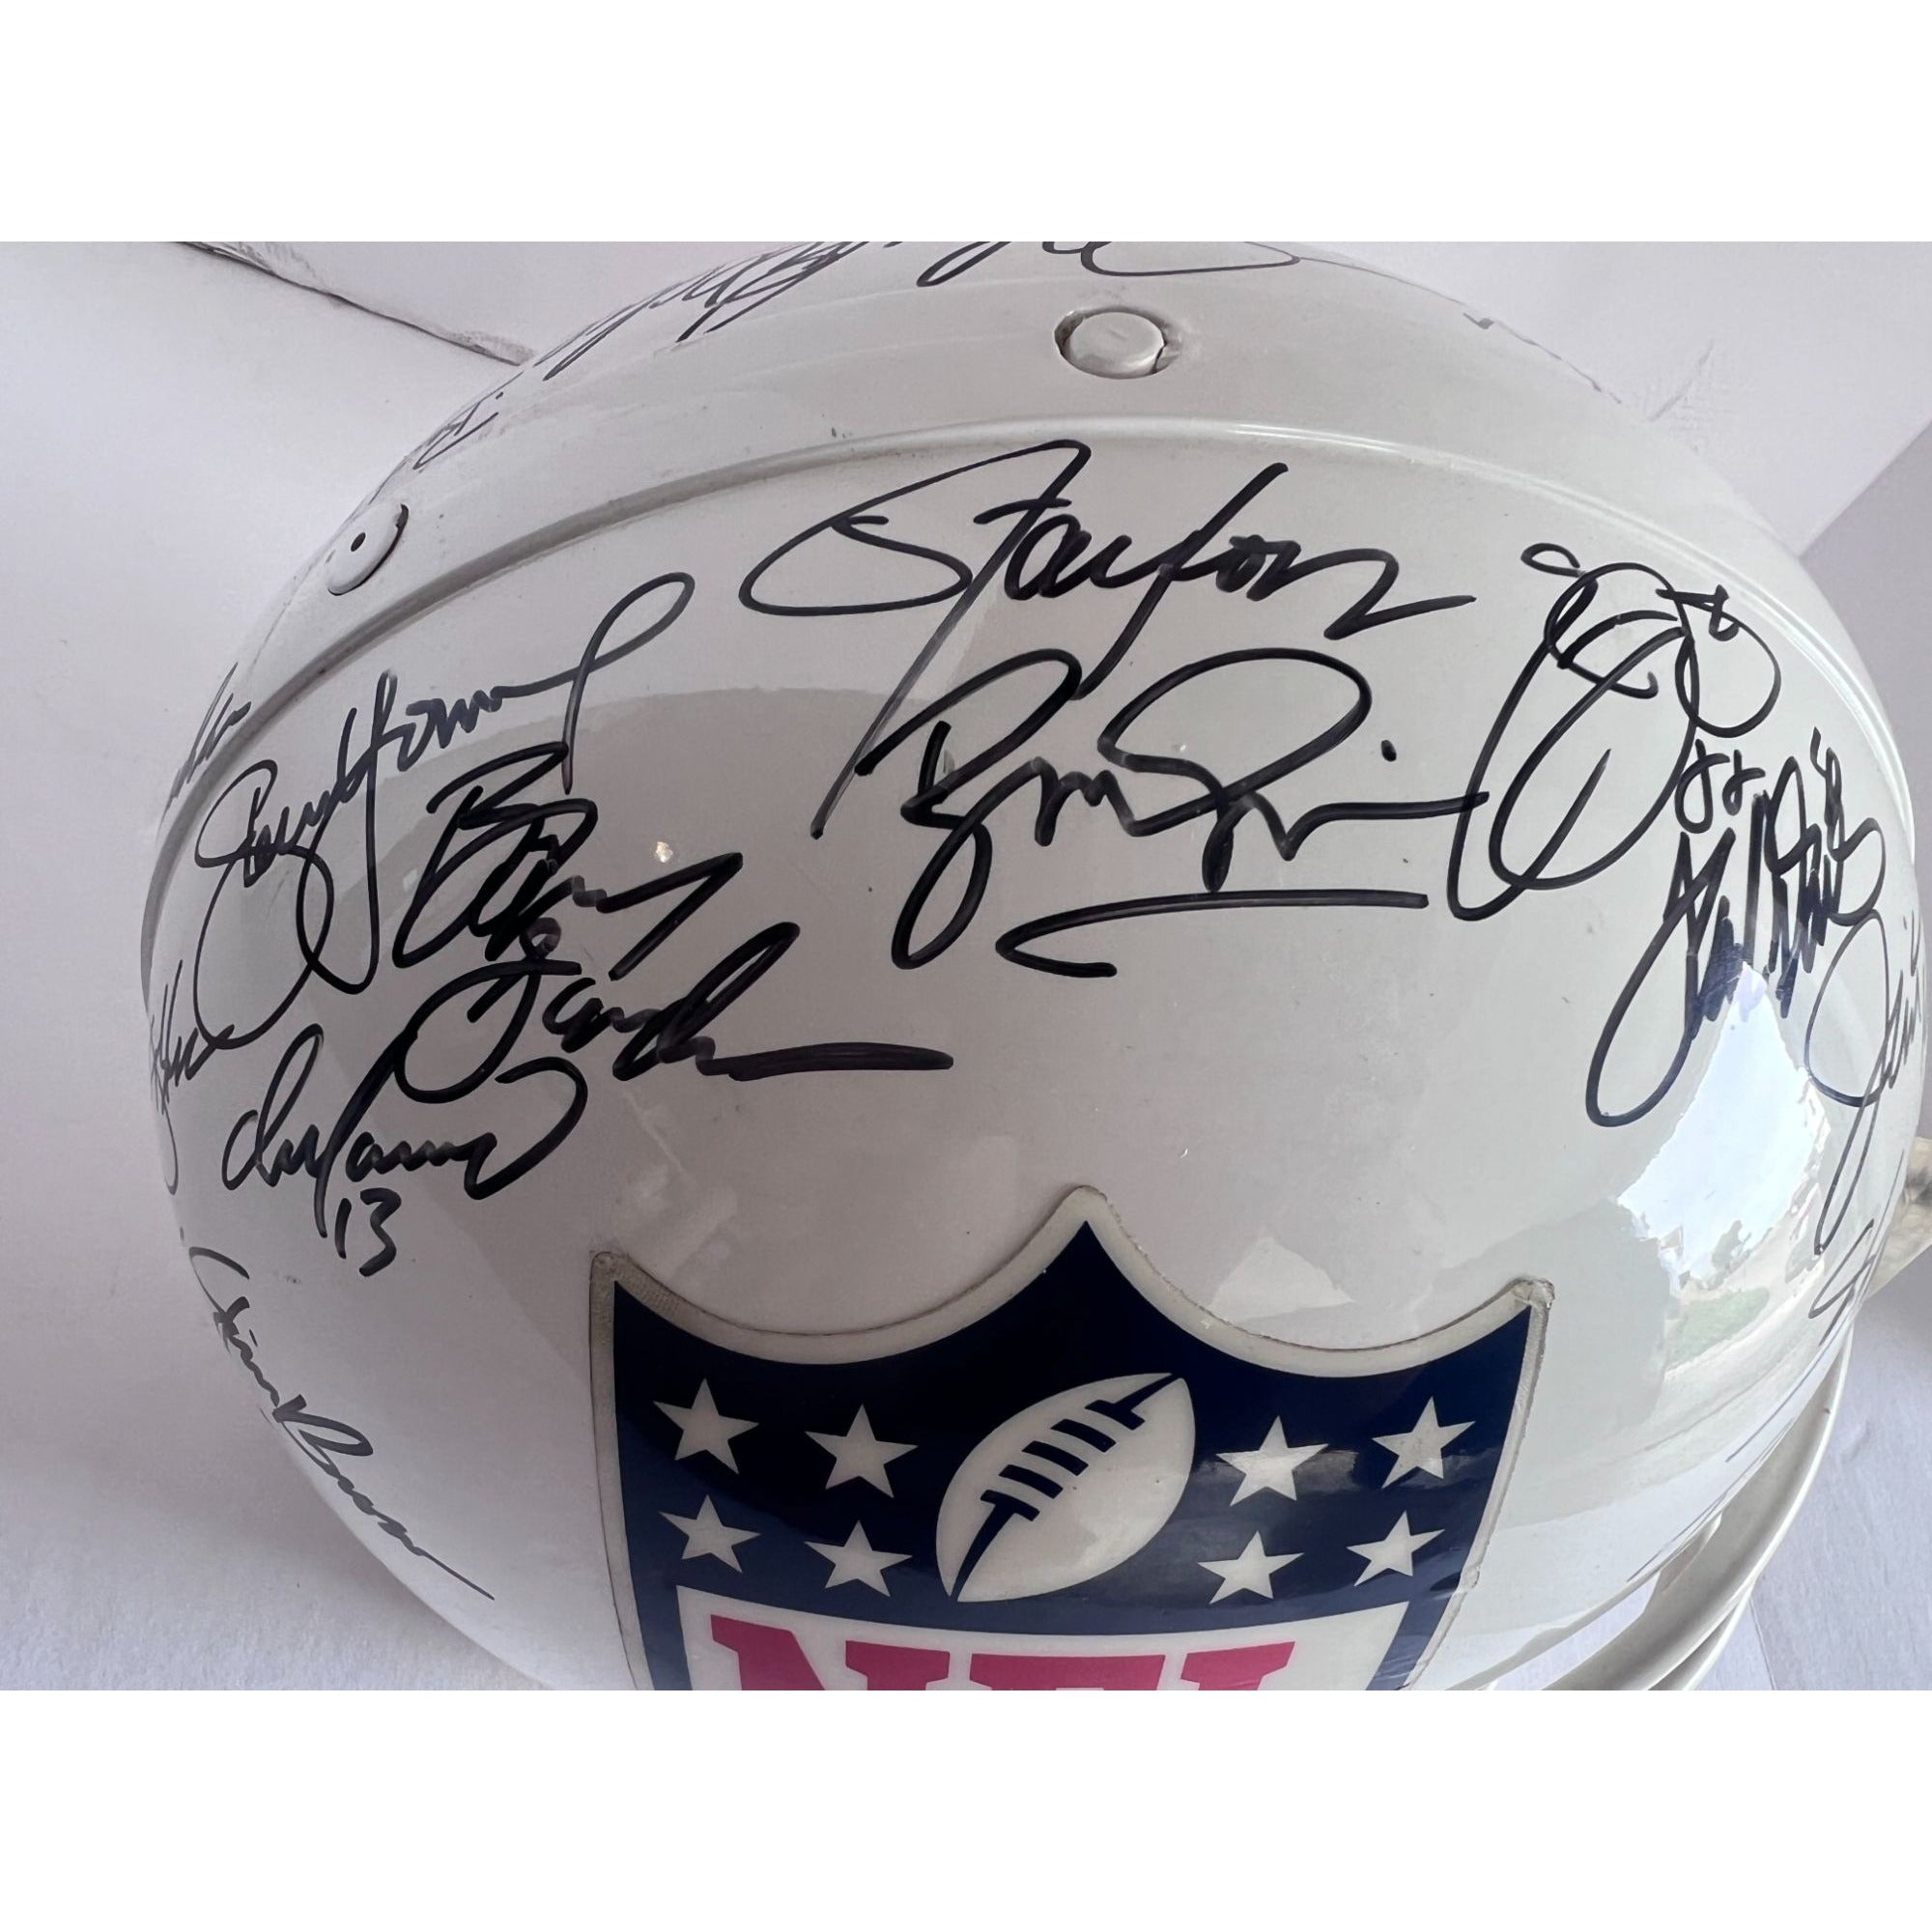 NFL MVPS Bart Starr Emmitt Smith Joe Montana John Elway Jim Brown 37 in all Riddell Pro vintage helmet signed with proof